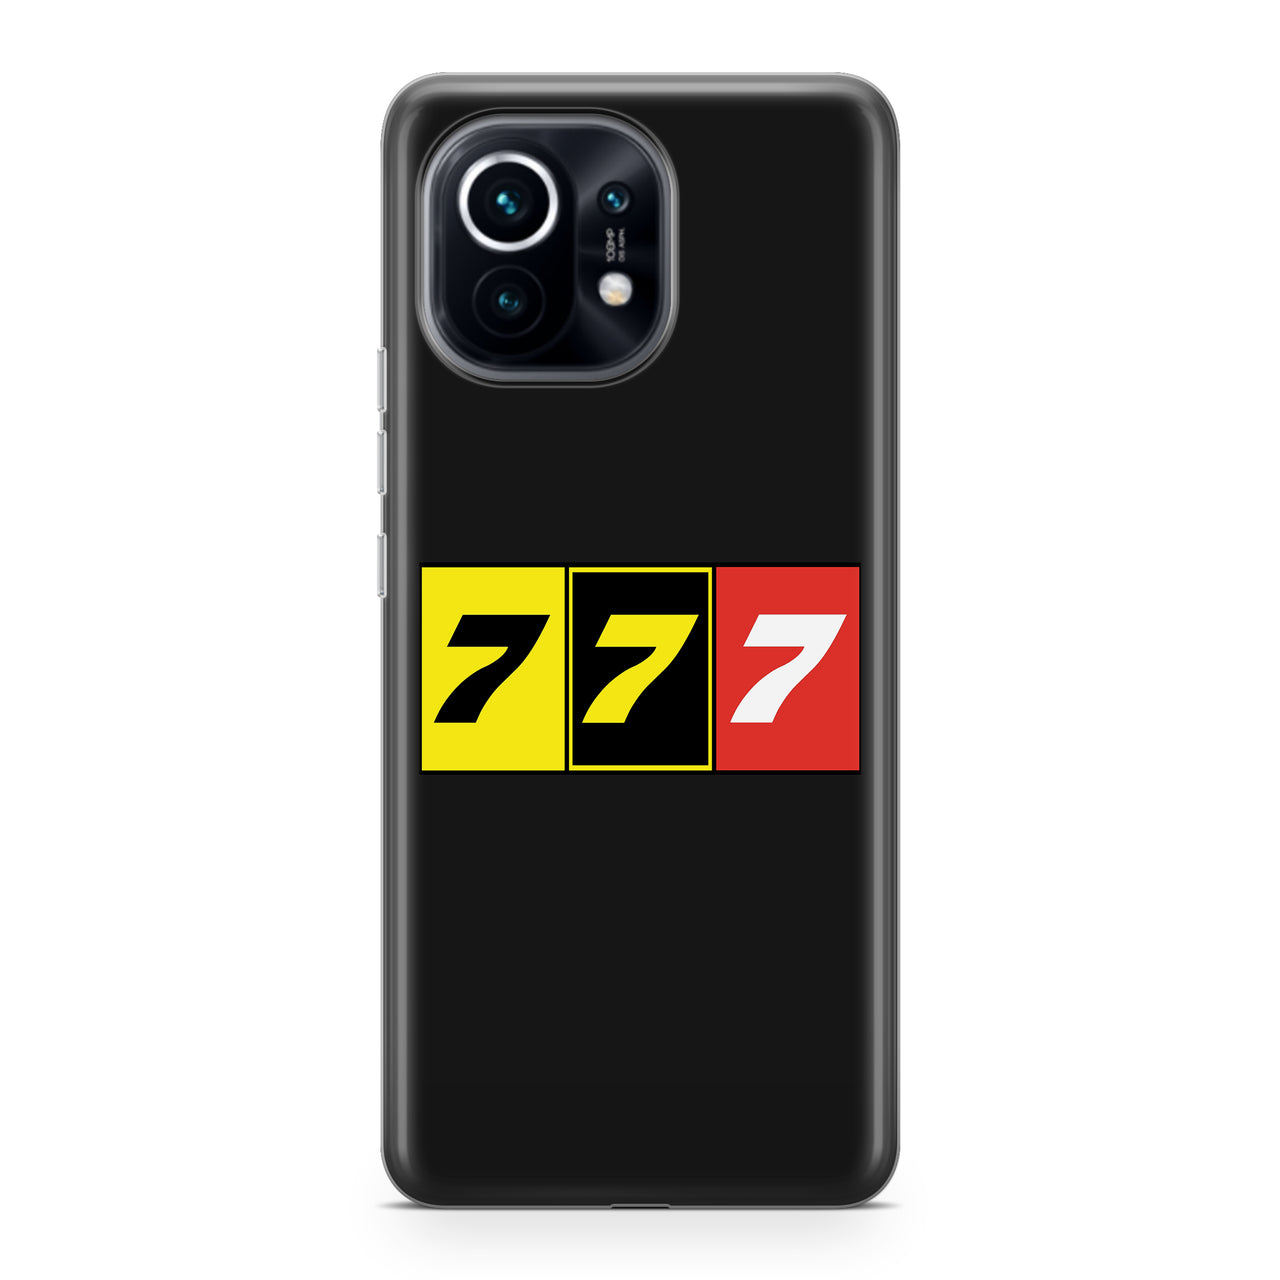 Flat Colourful 777 Designed Xiaomi Cases